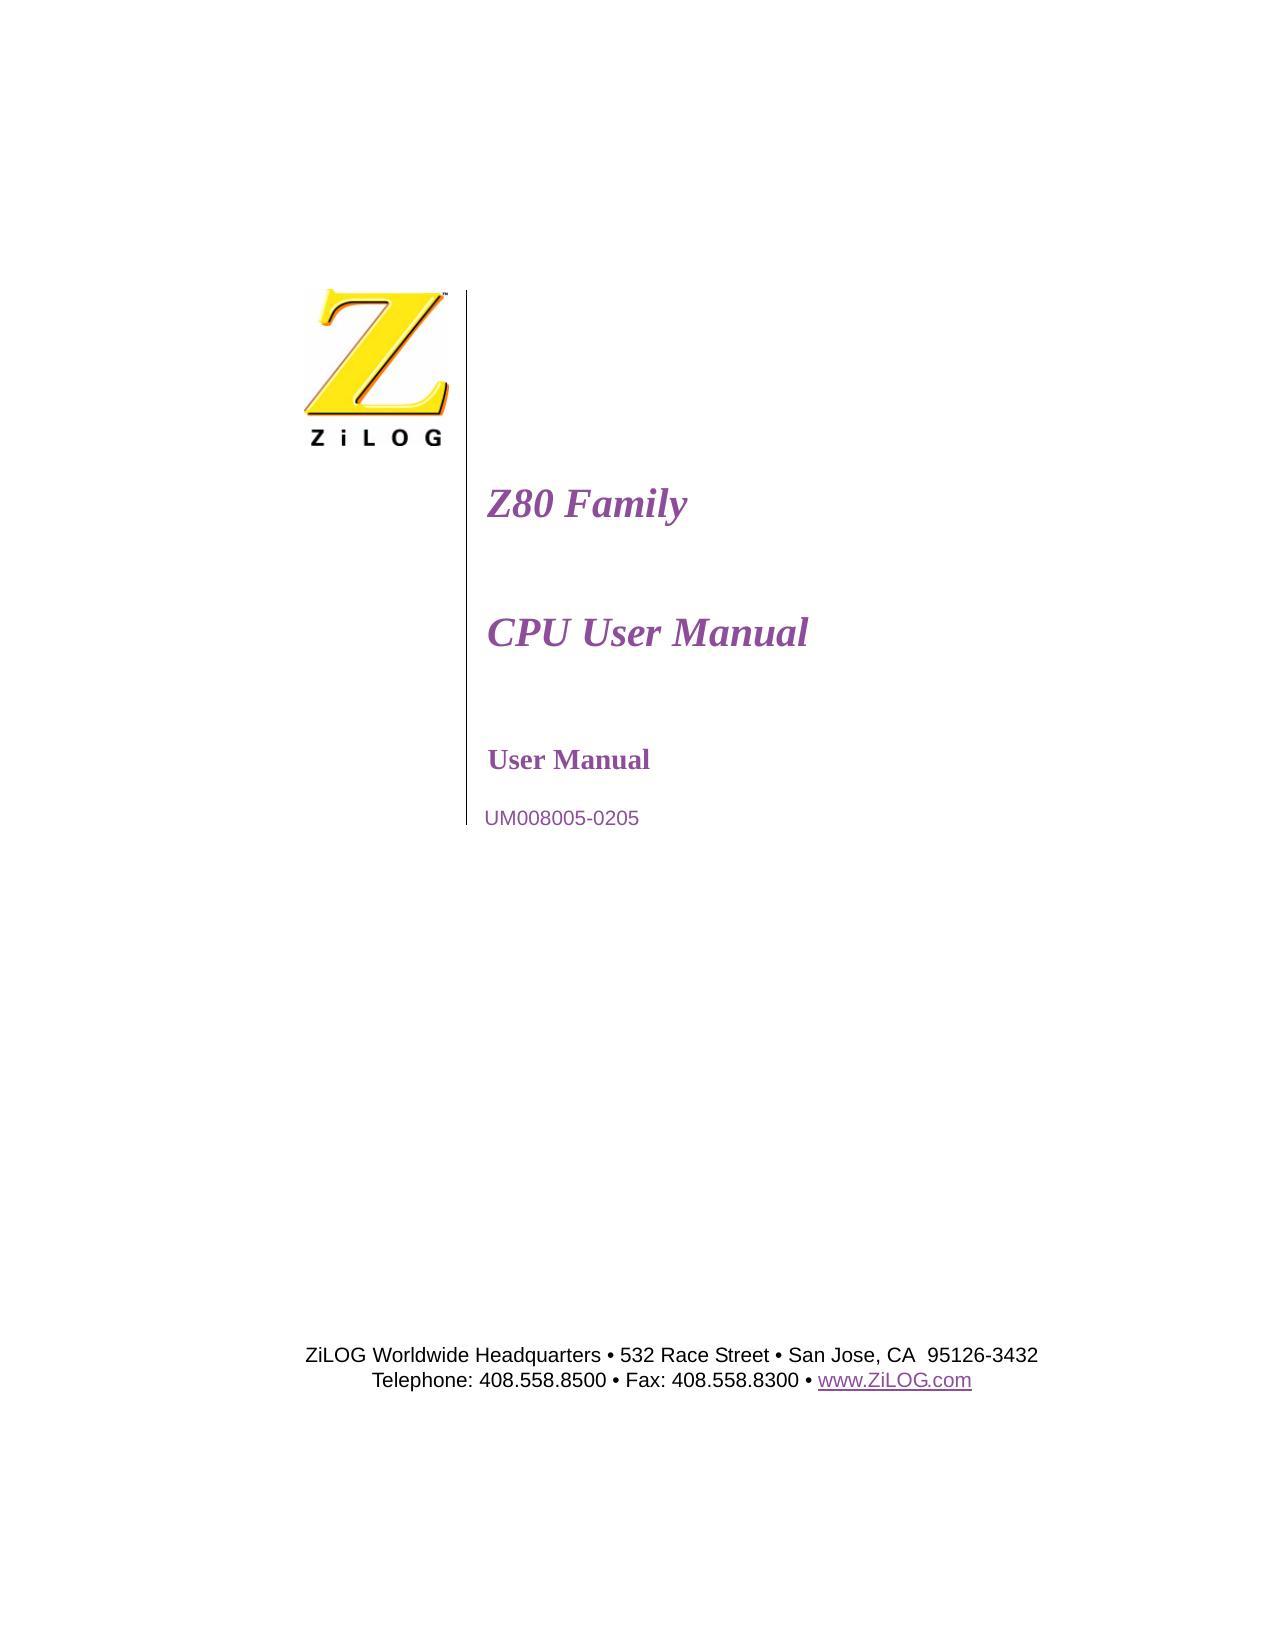 zll-2-i-l-0-g-280-family-cpu-user-manual.pdf